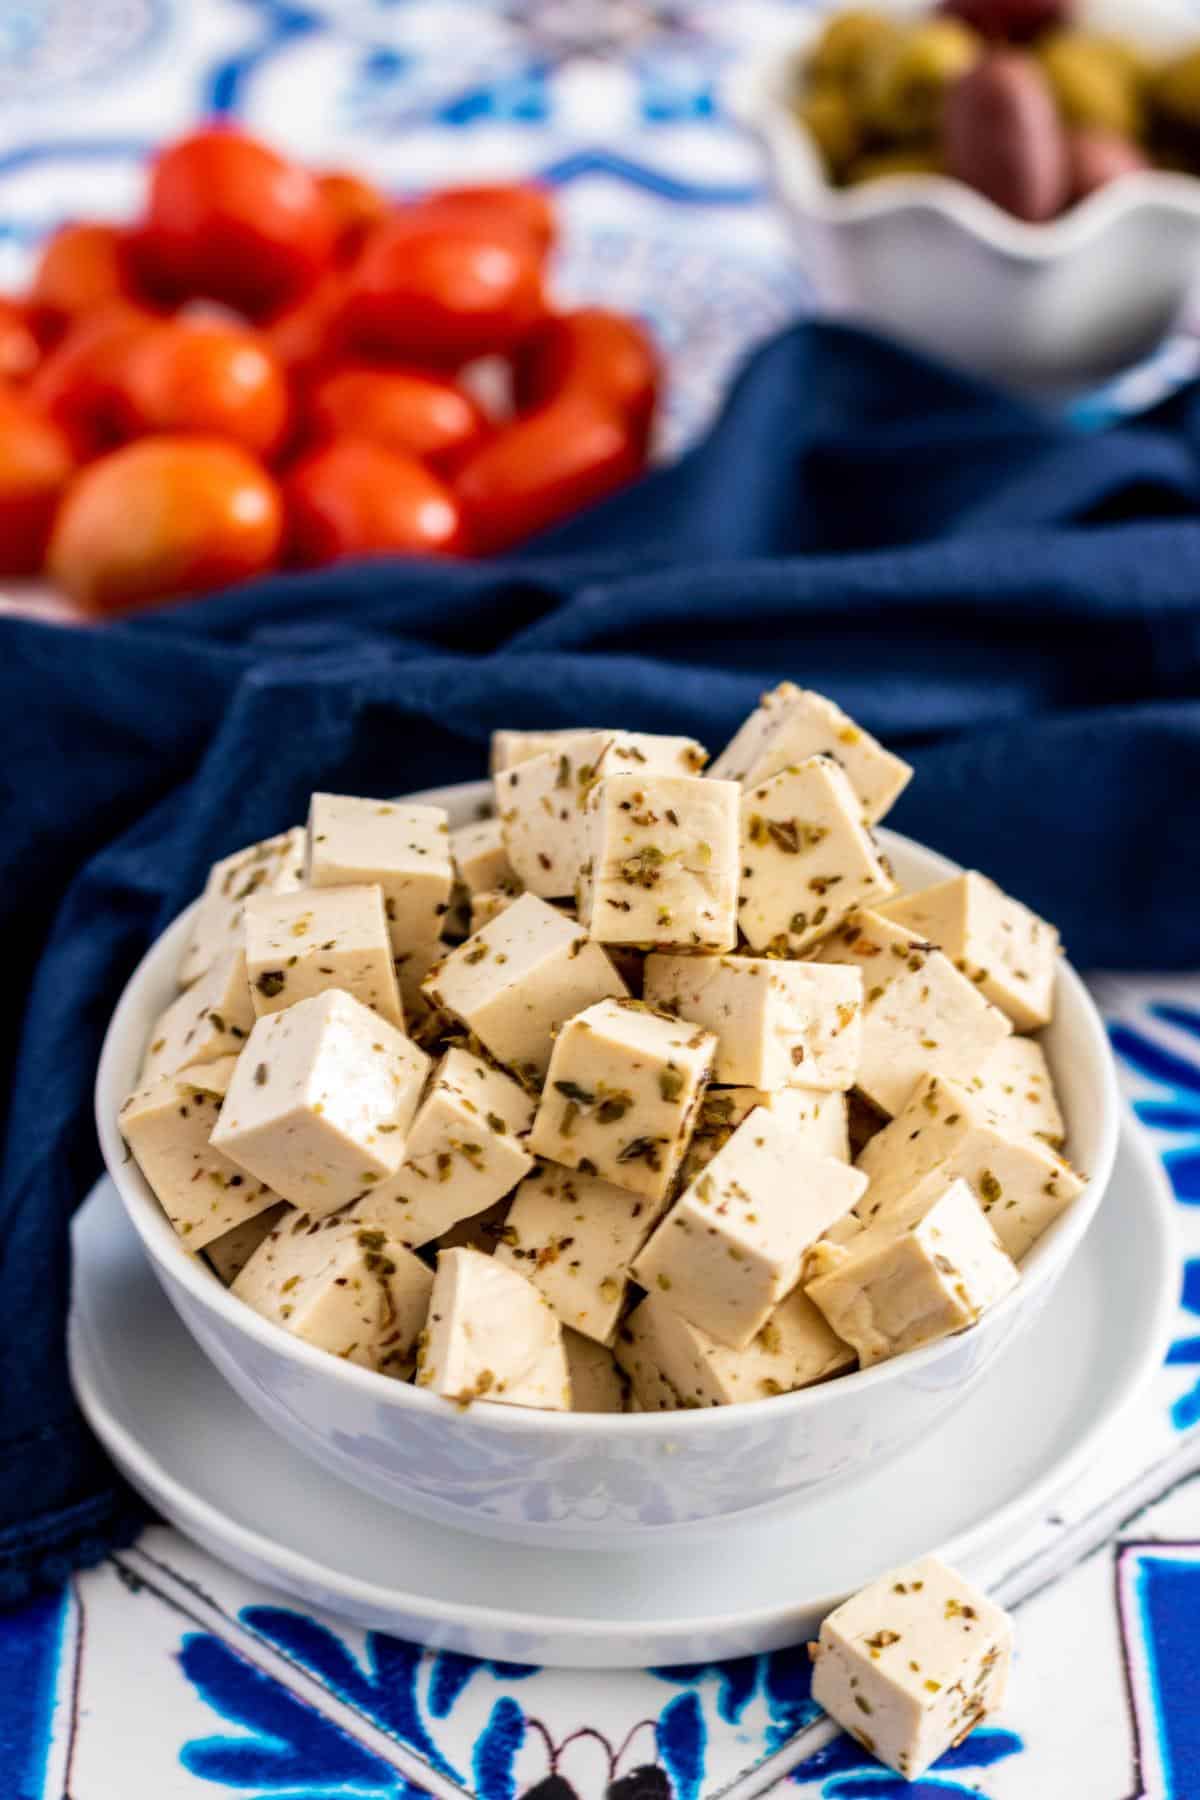 Bowls of tofu feta, grape tomatoes, and olives.